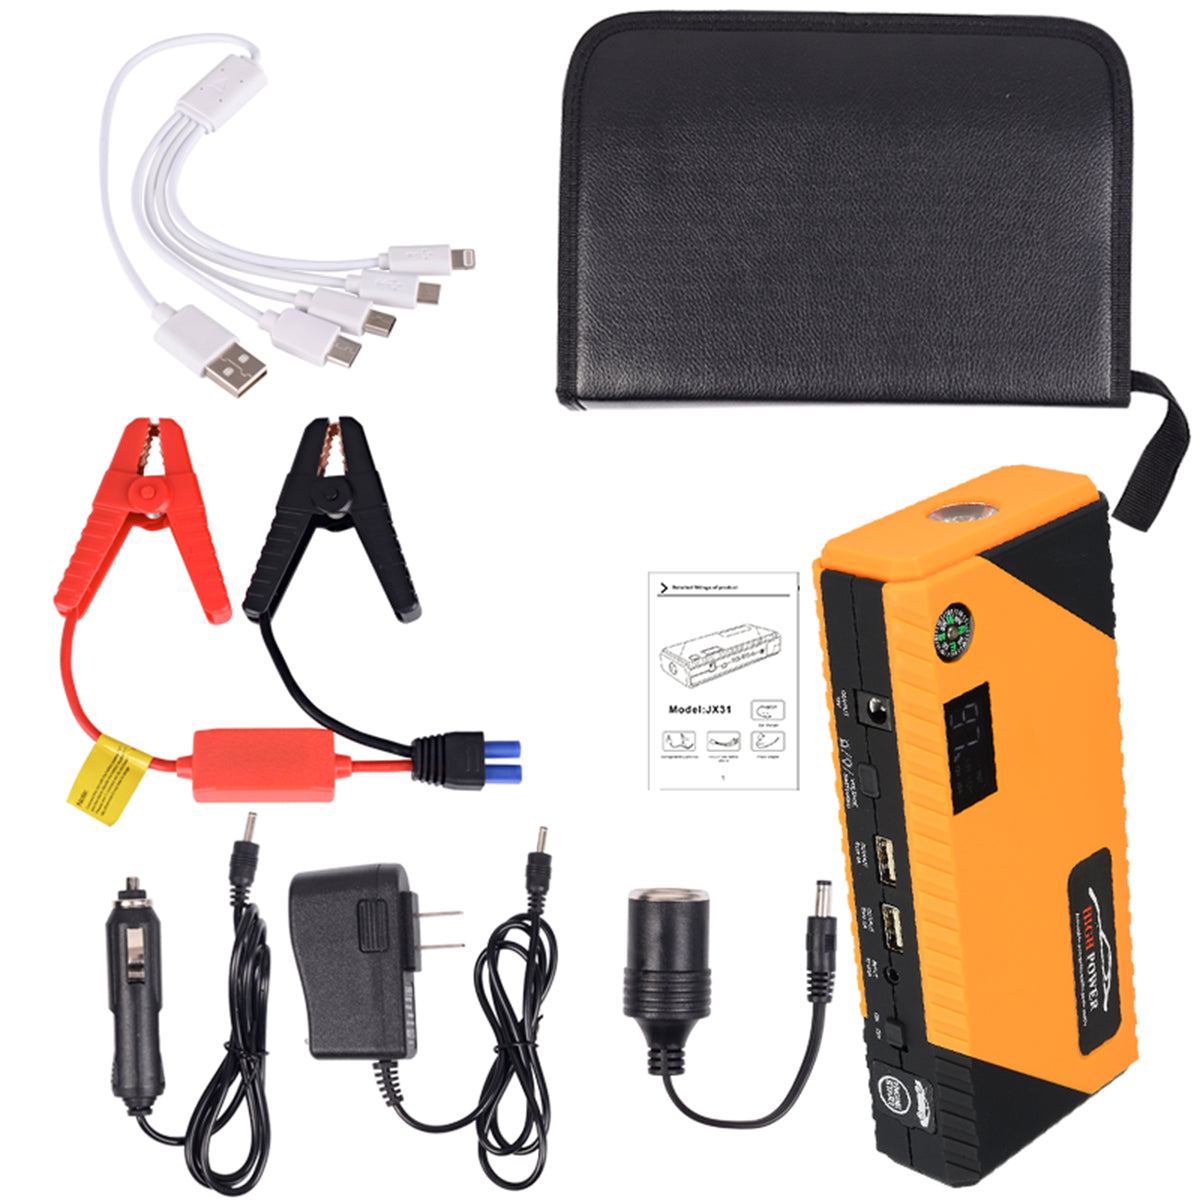 Sandy Brown JX31 Display 98600mAh 12V Car Jump Starter Portable USB Emergency Power Bank Battery Booster Clamp 1000A DC Port Yellow